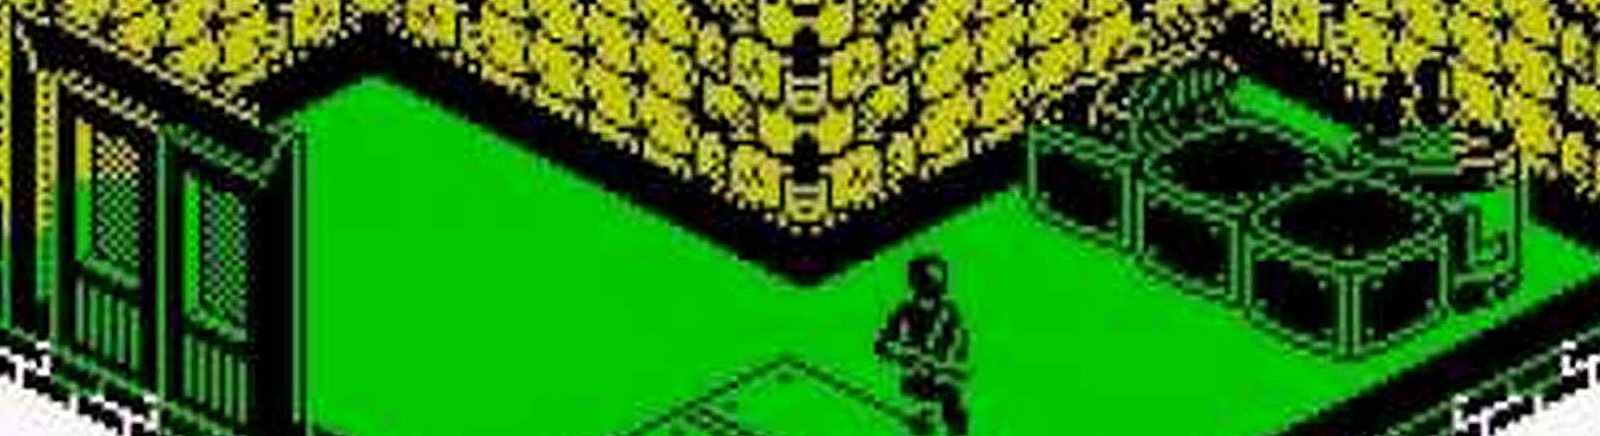 Дата выхода Strike Force: Cobra  на Commodore 64, ZX Spectrum и Amstrad CPC в России и во всем мире